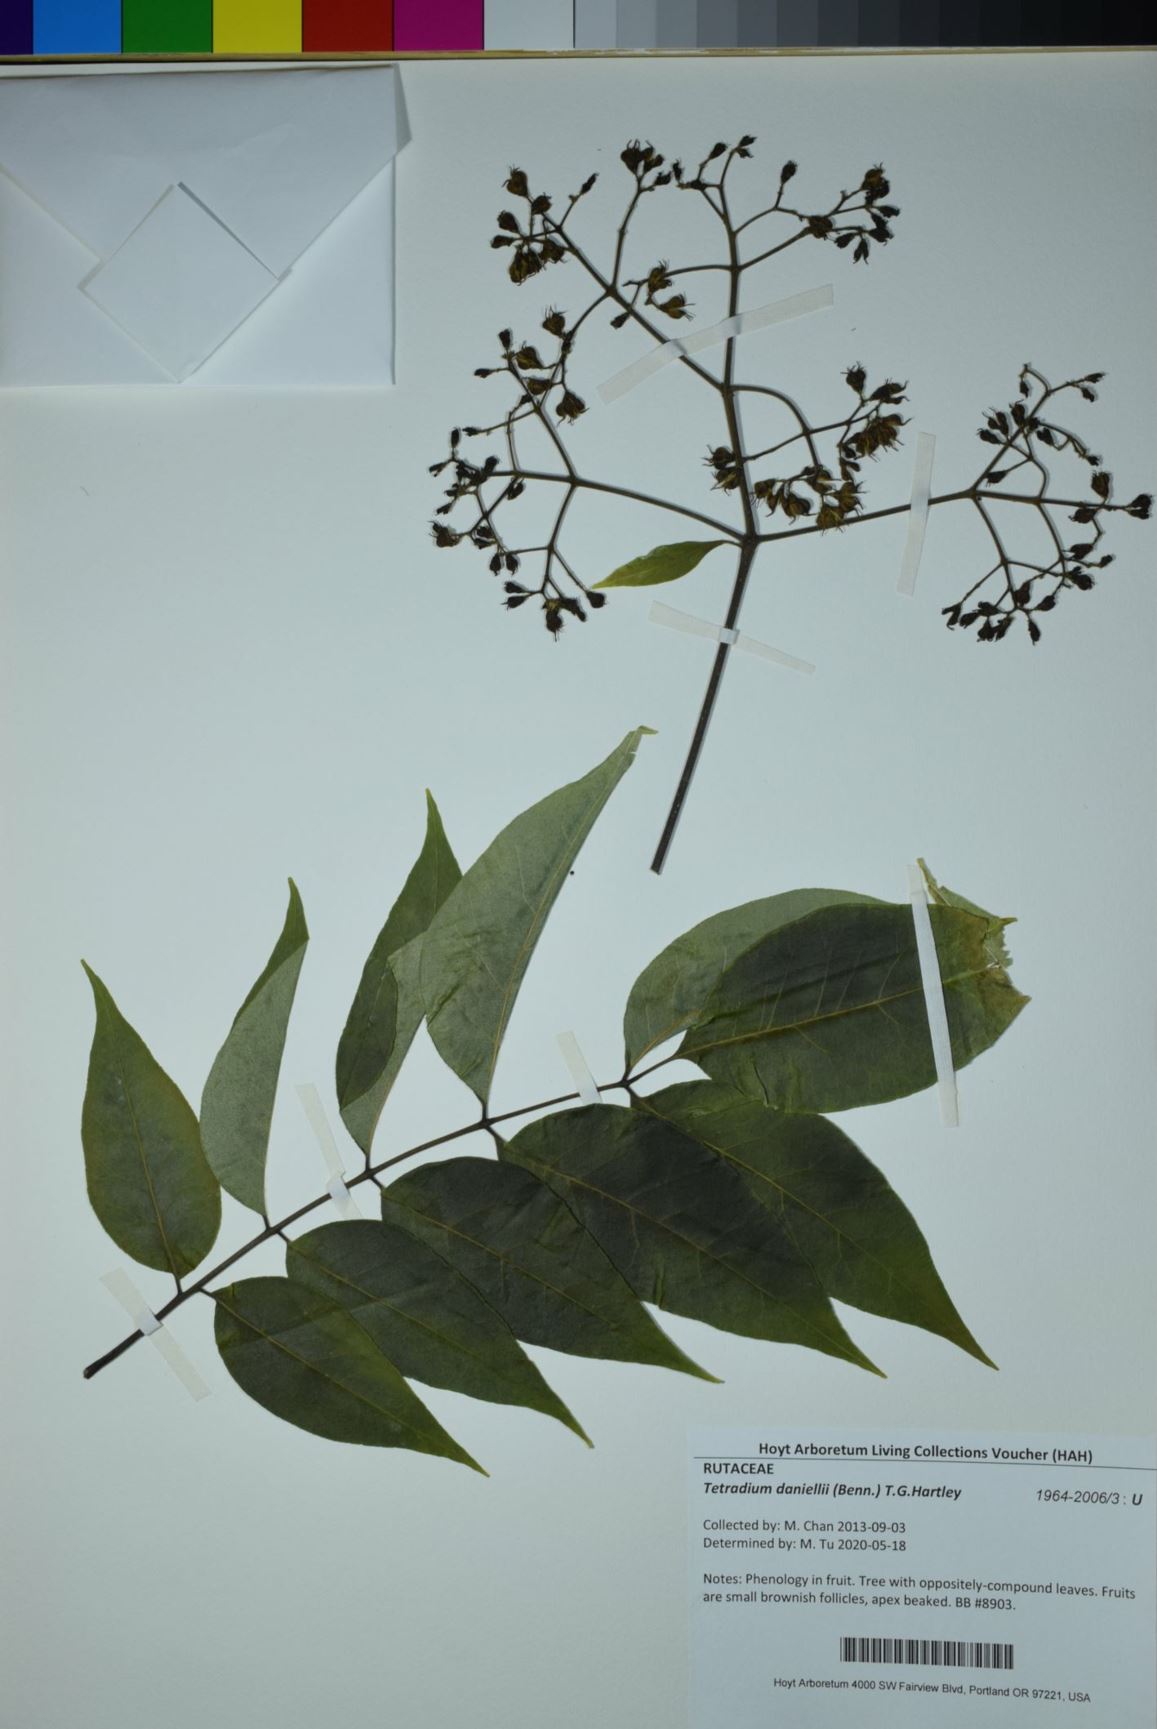 Tetradium daniellii - Korean Bee-Bee Tree